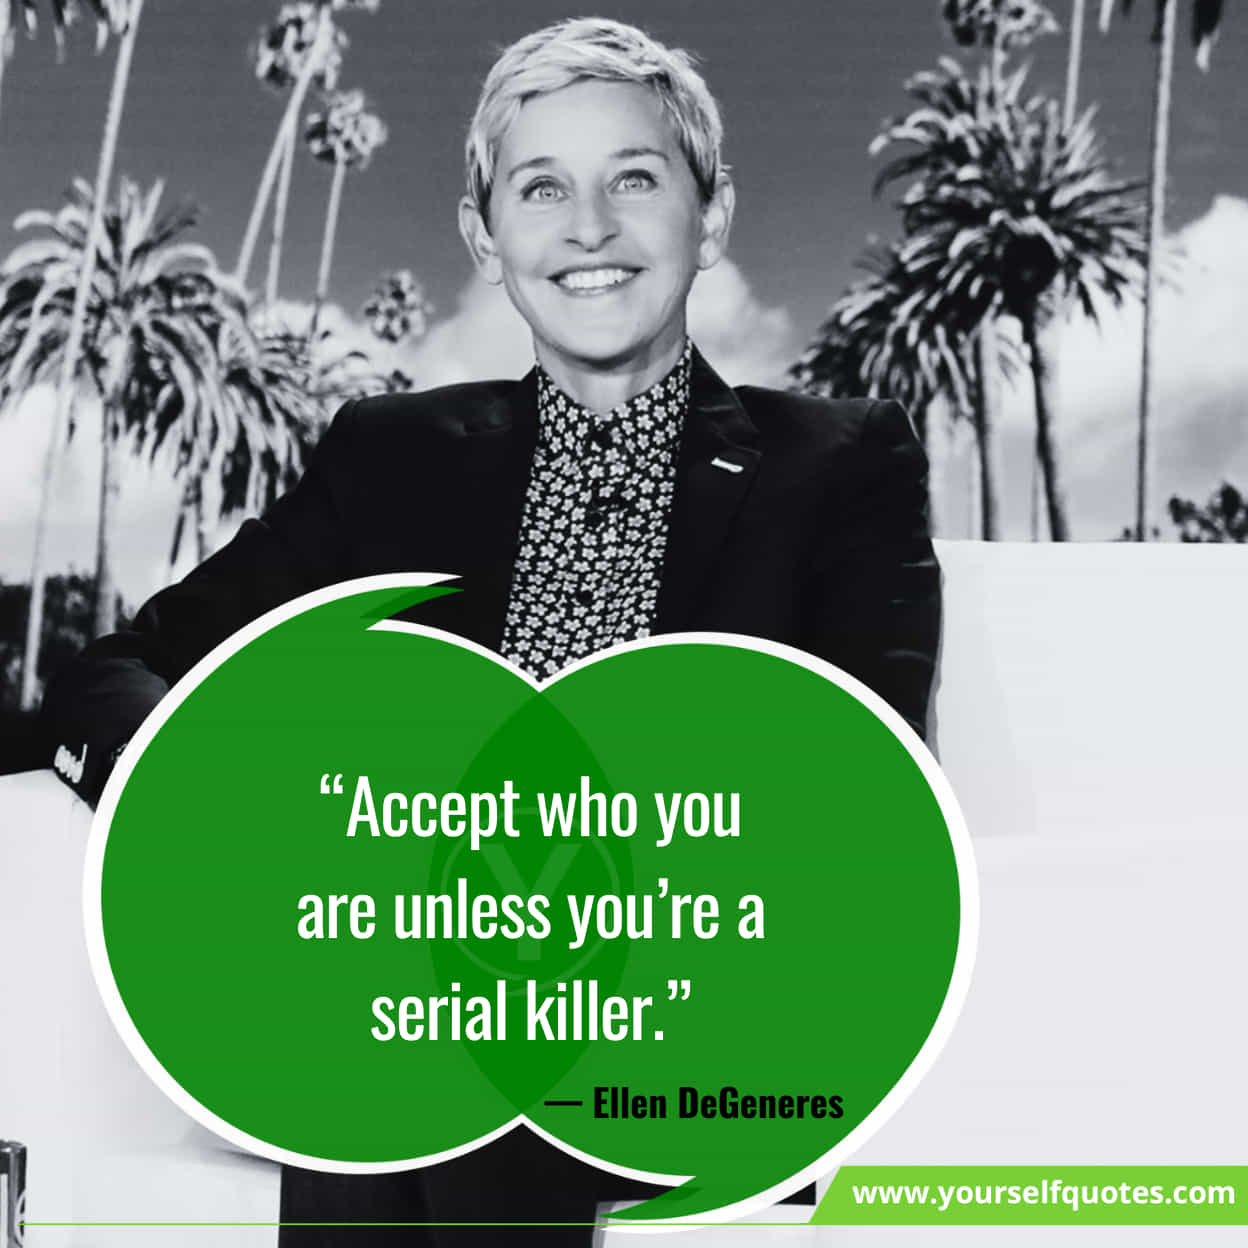 Latest Ellen DeGeneres Quotes About Accept Yourself